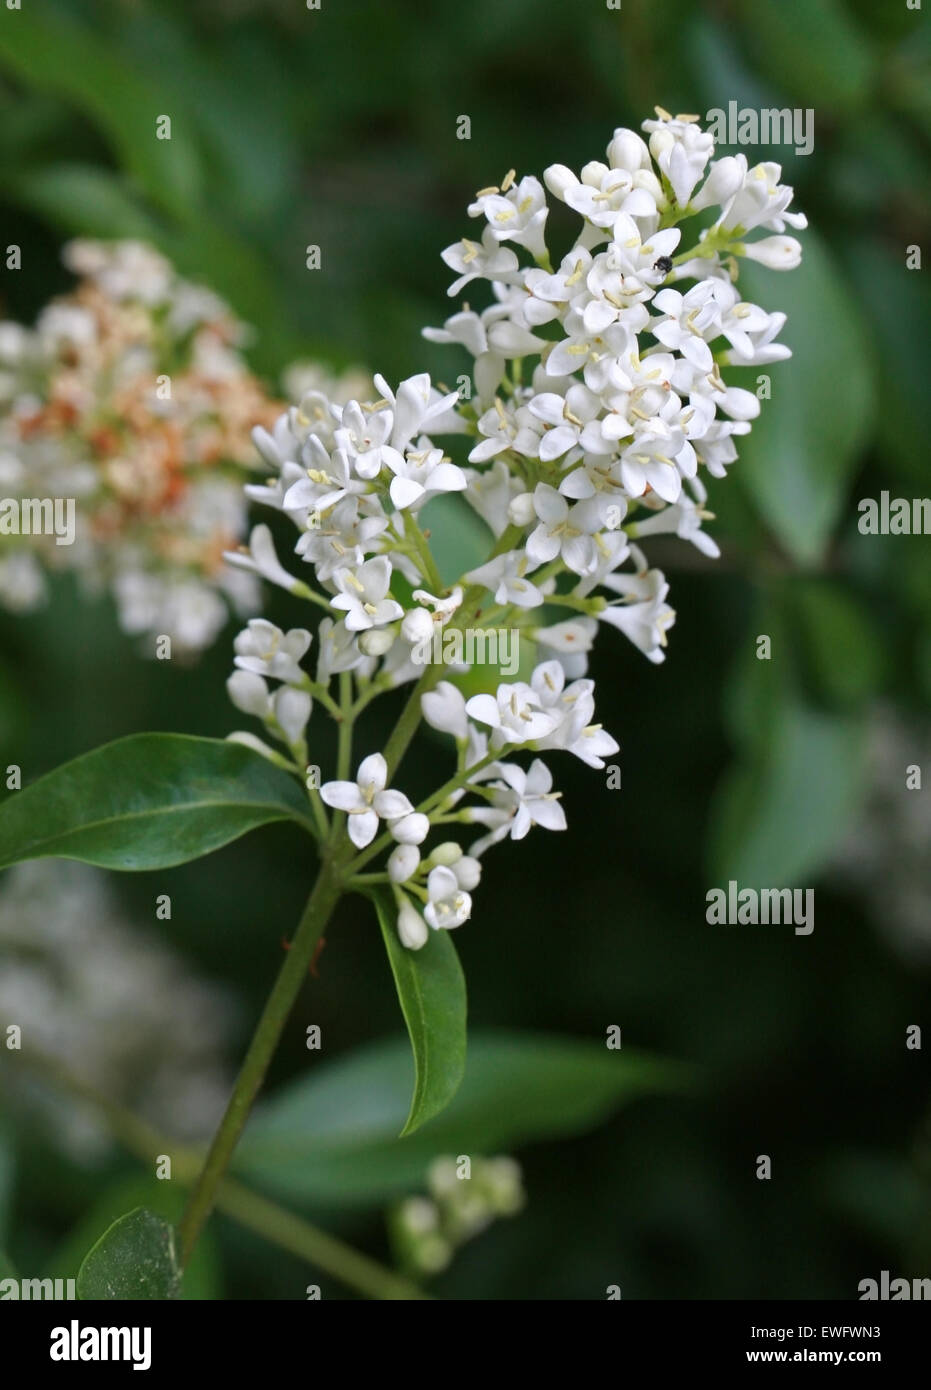 Common Privet or European Privet, Ligustrum vulgare, Oleaceae. Stock Photo